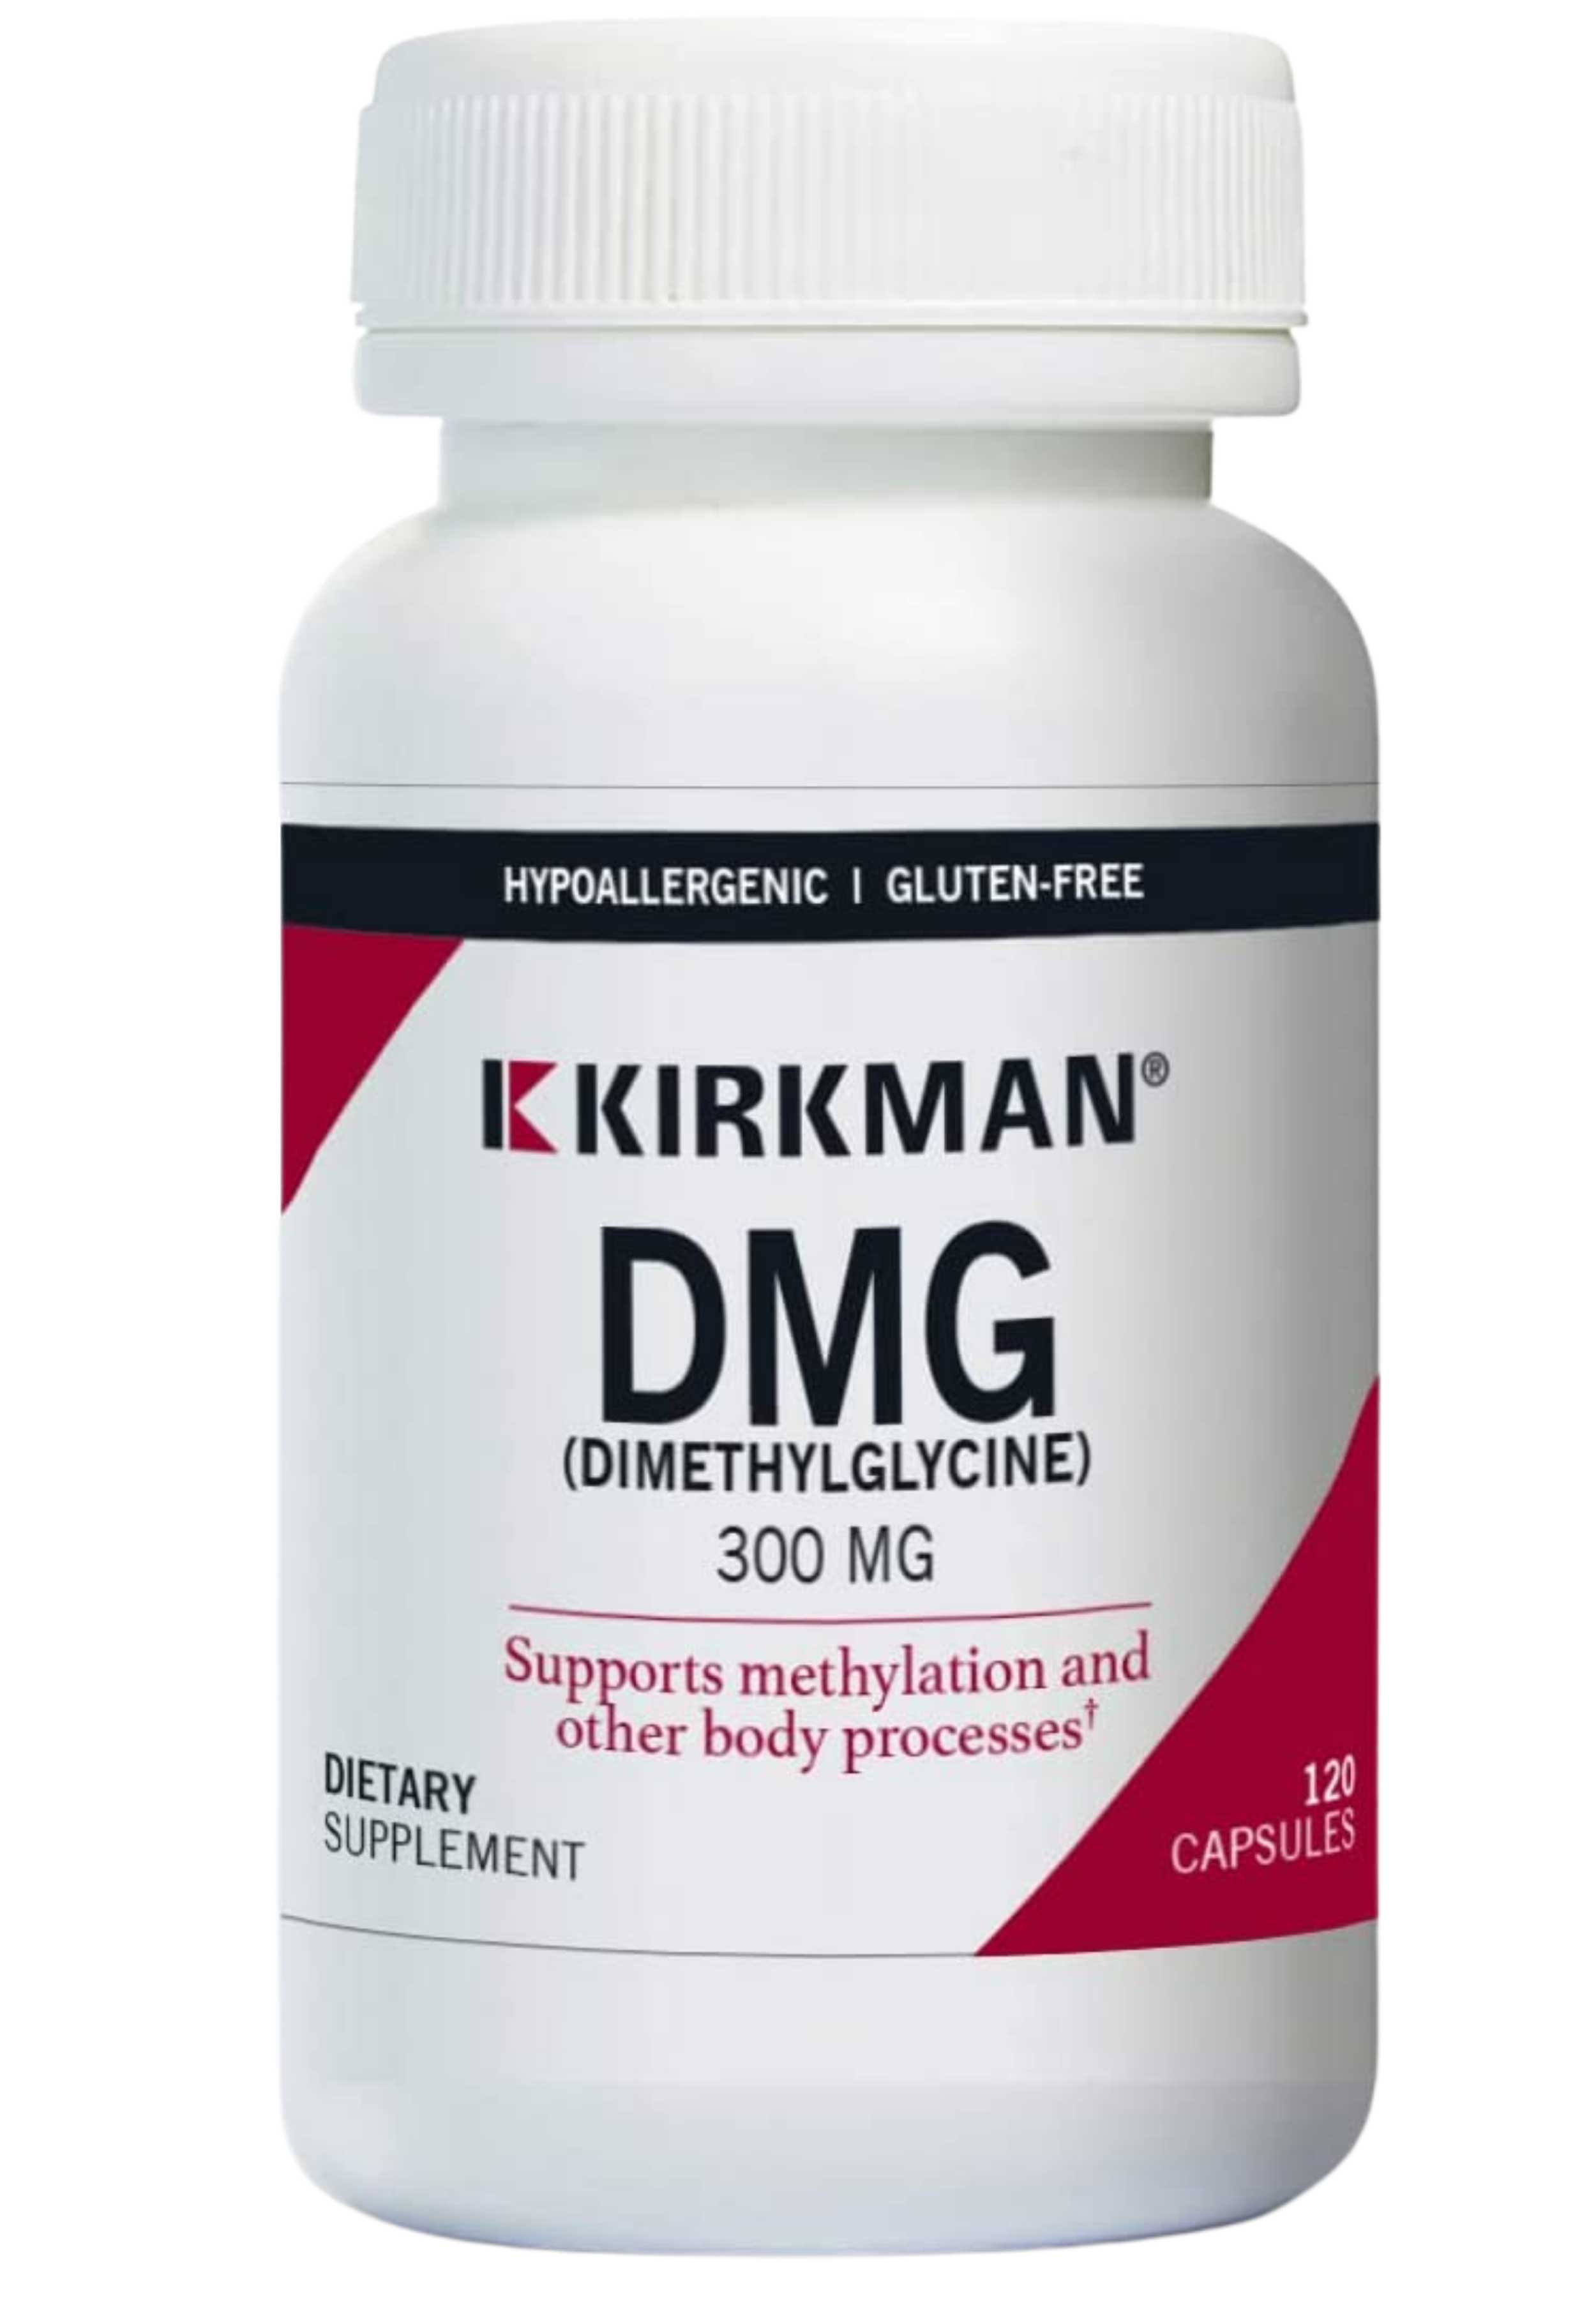 Kirkman DMG (Dimethylglycine) 300 mg